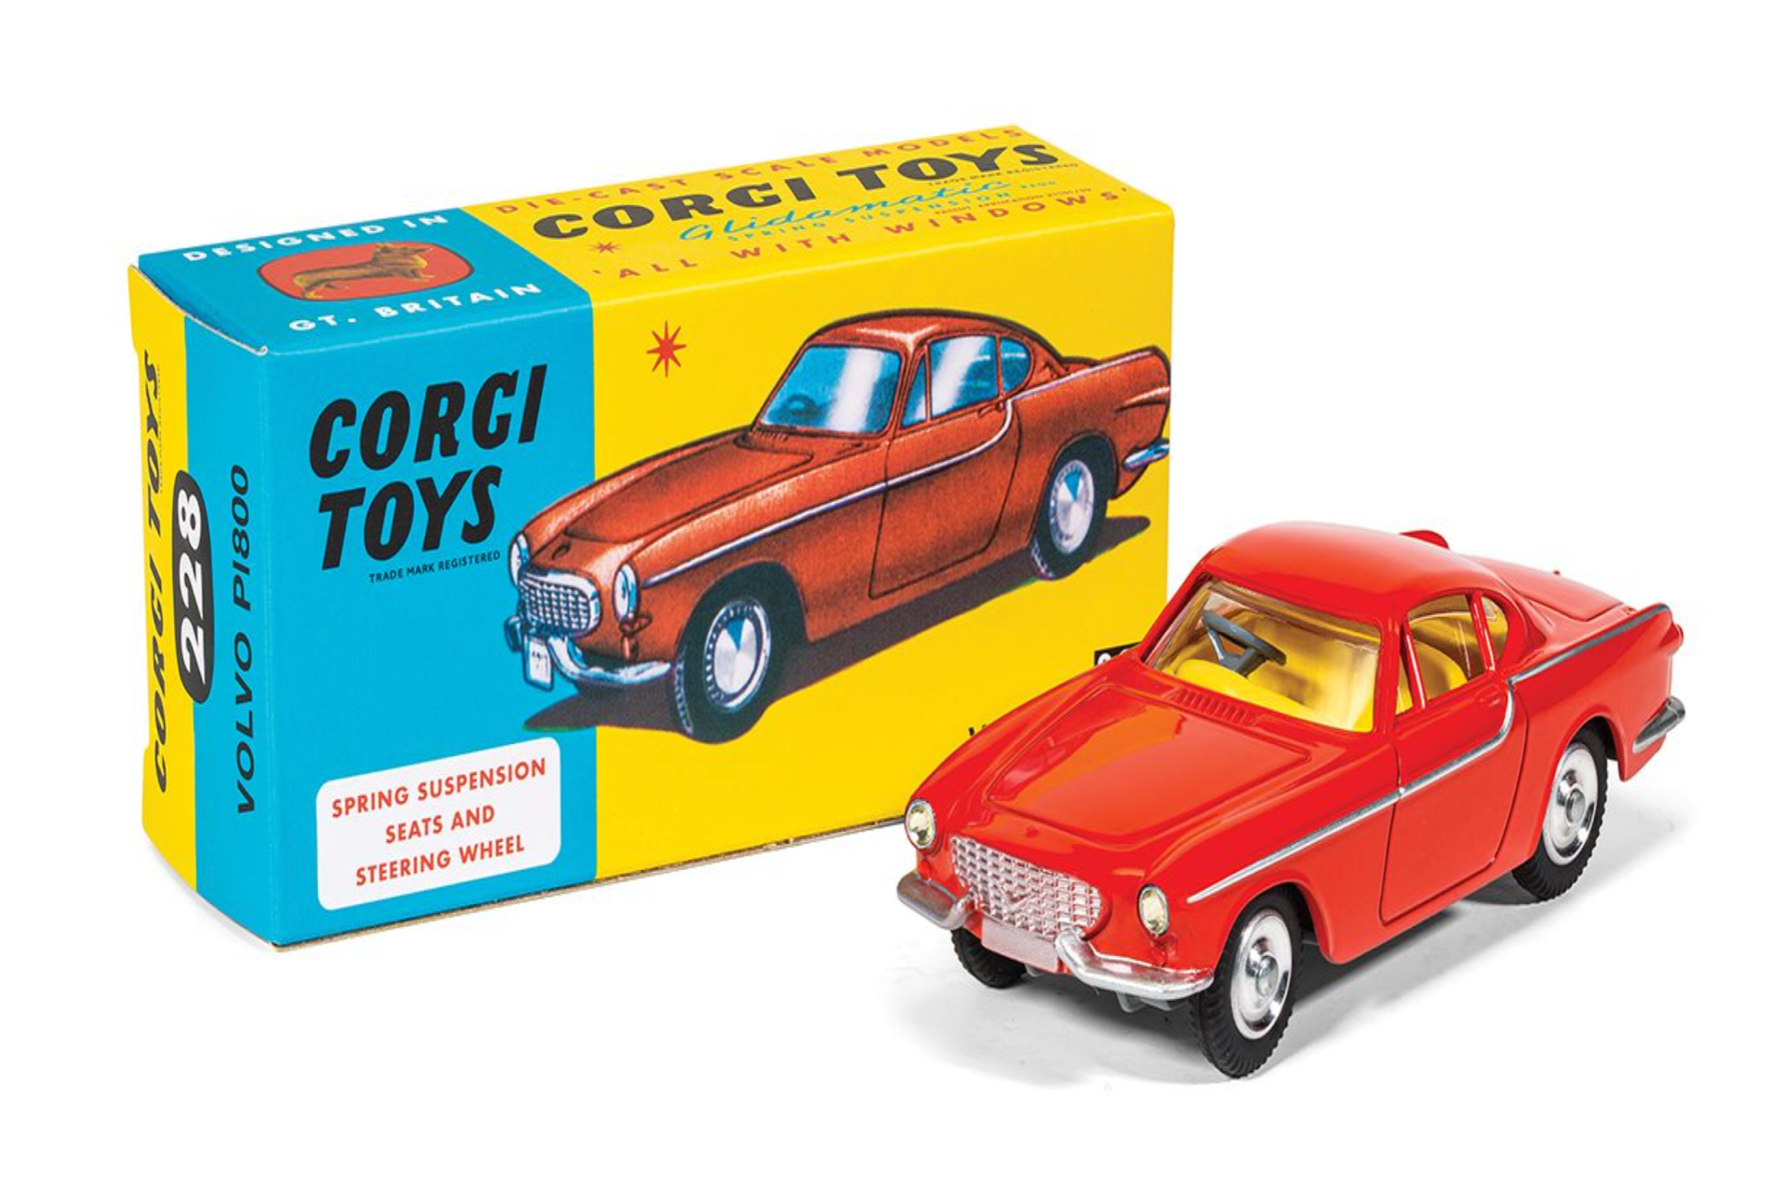 Corgi Toys (Britain's Heritage Series)